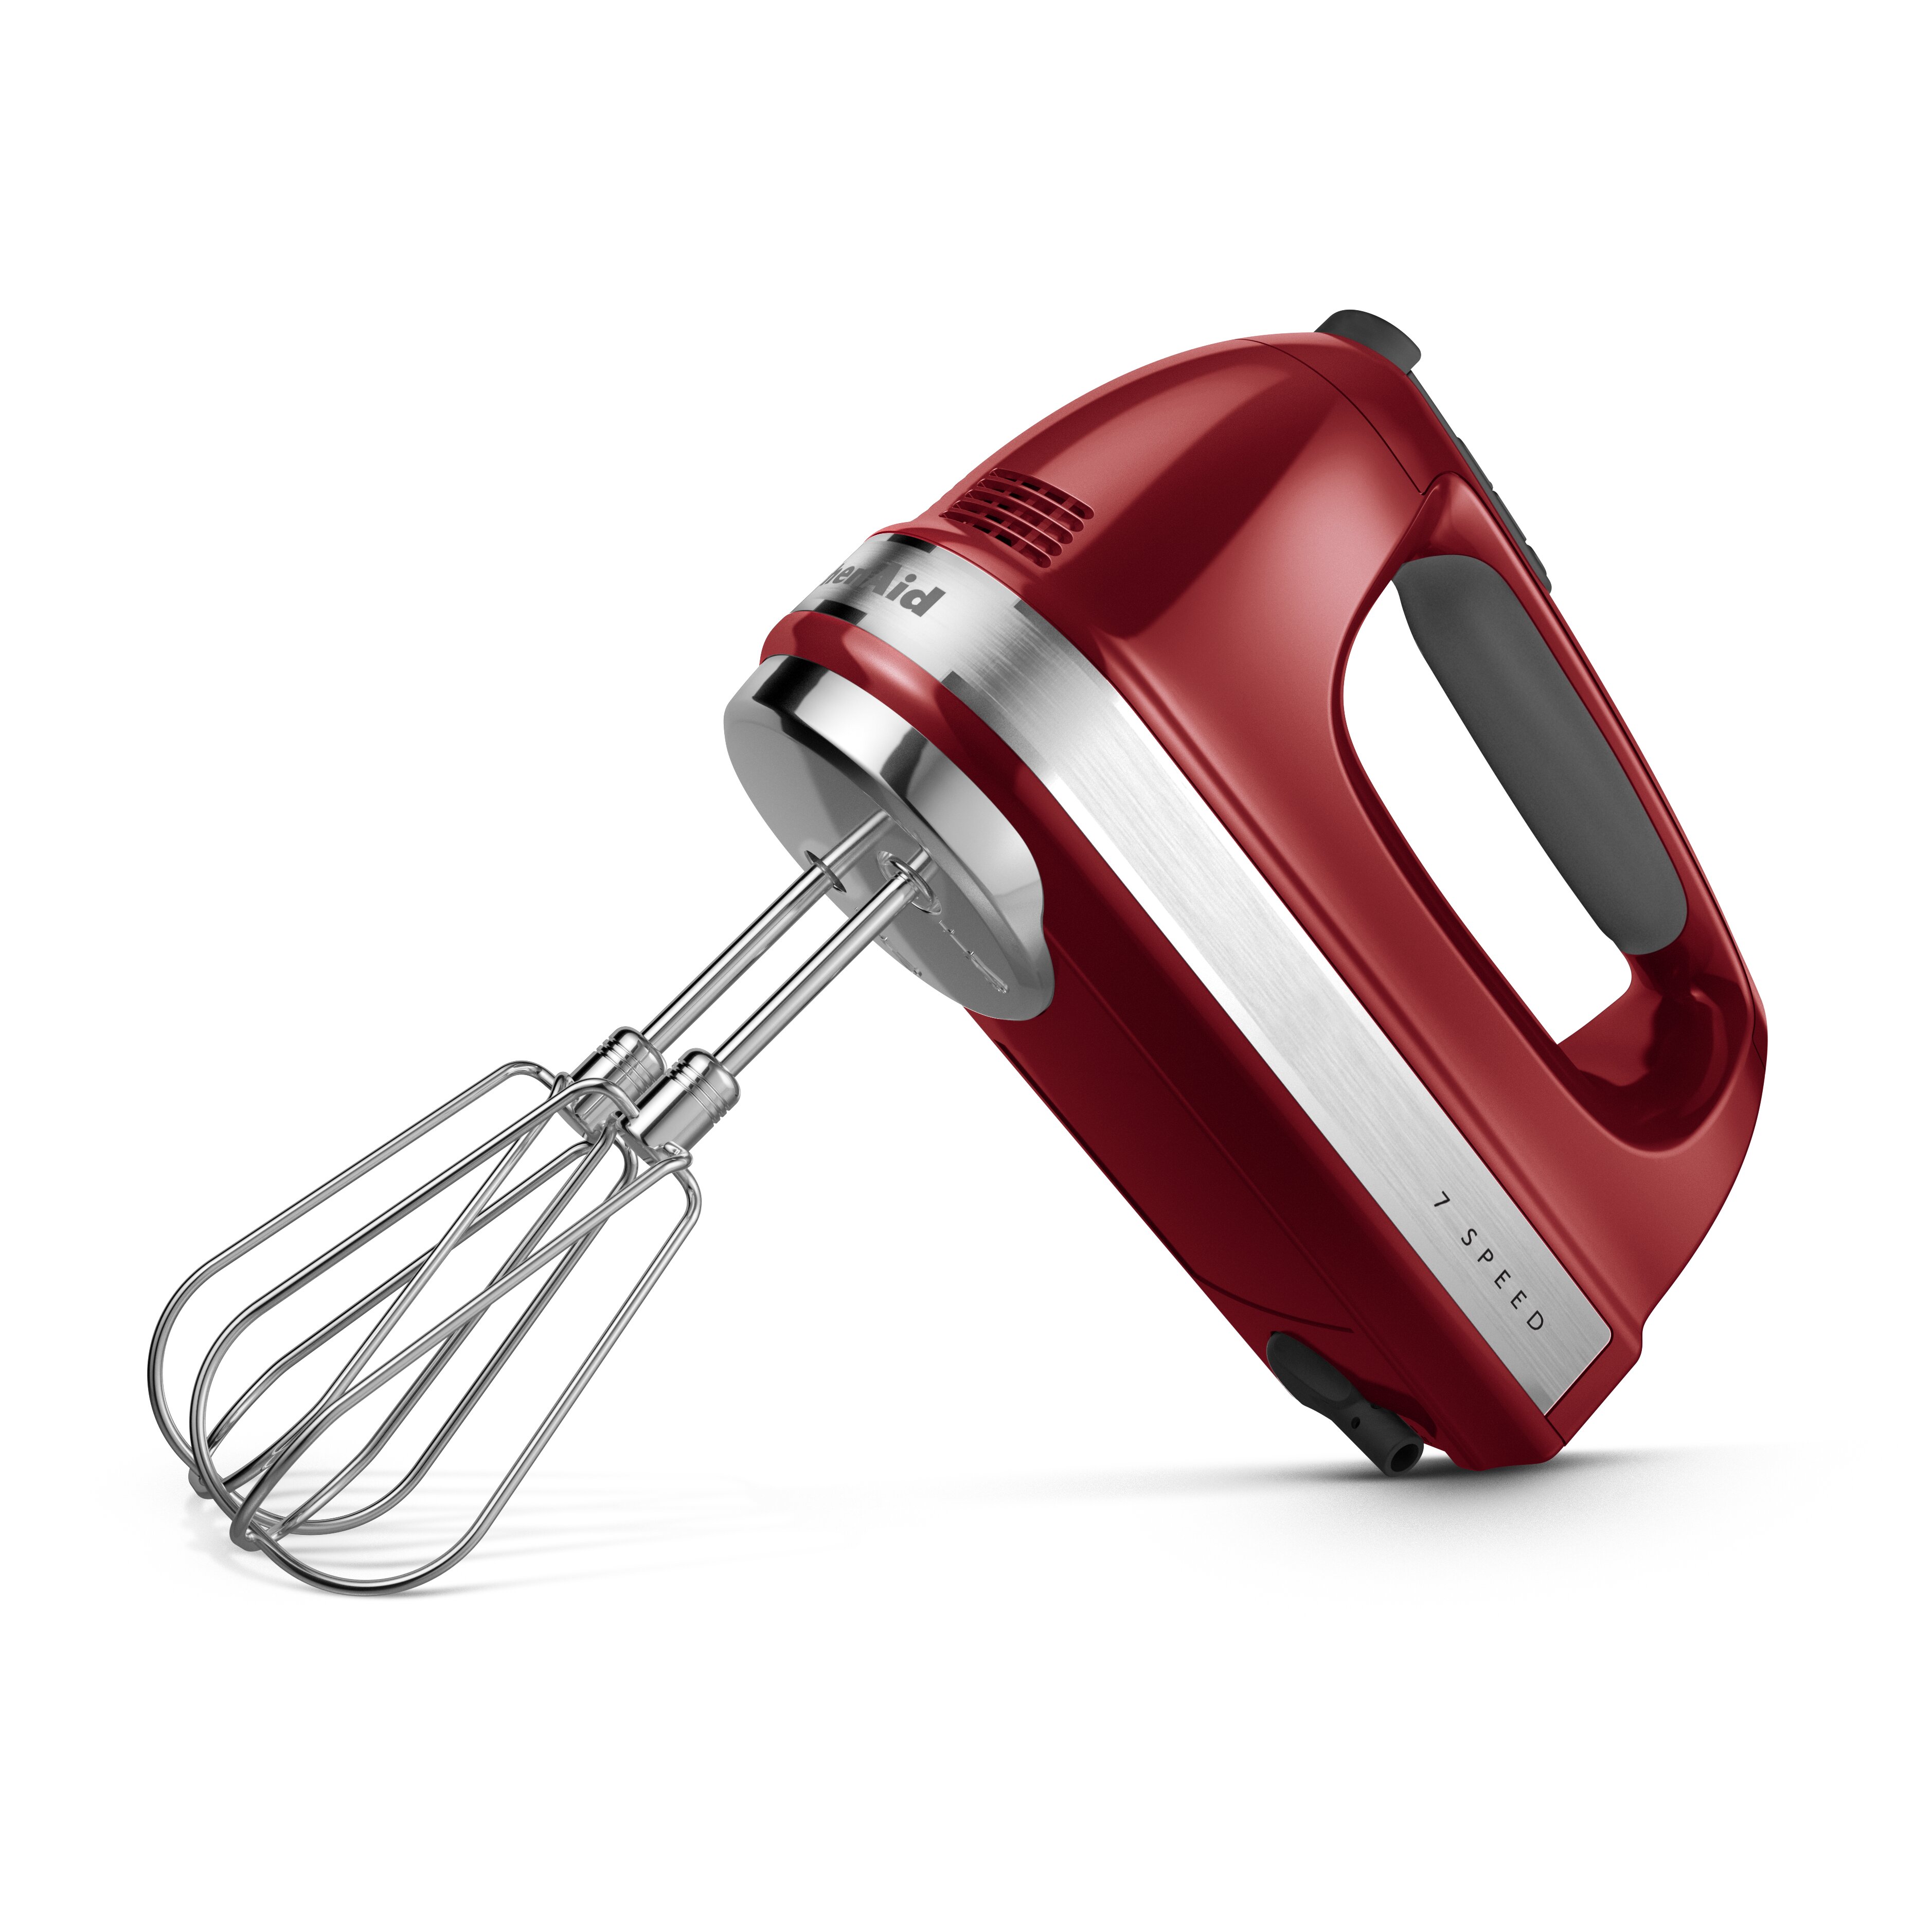 KitchenAid 7 Speed Hand Mixer & Reviews | Wayfair